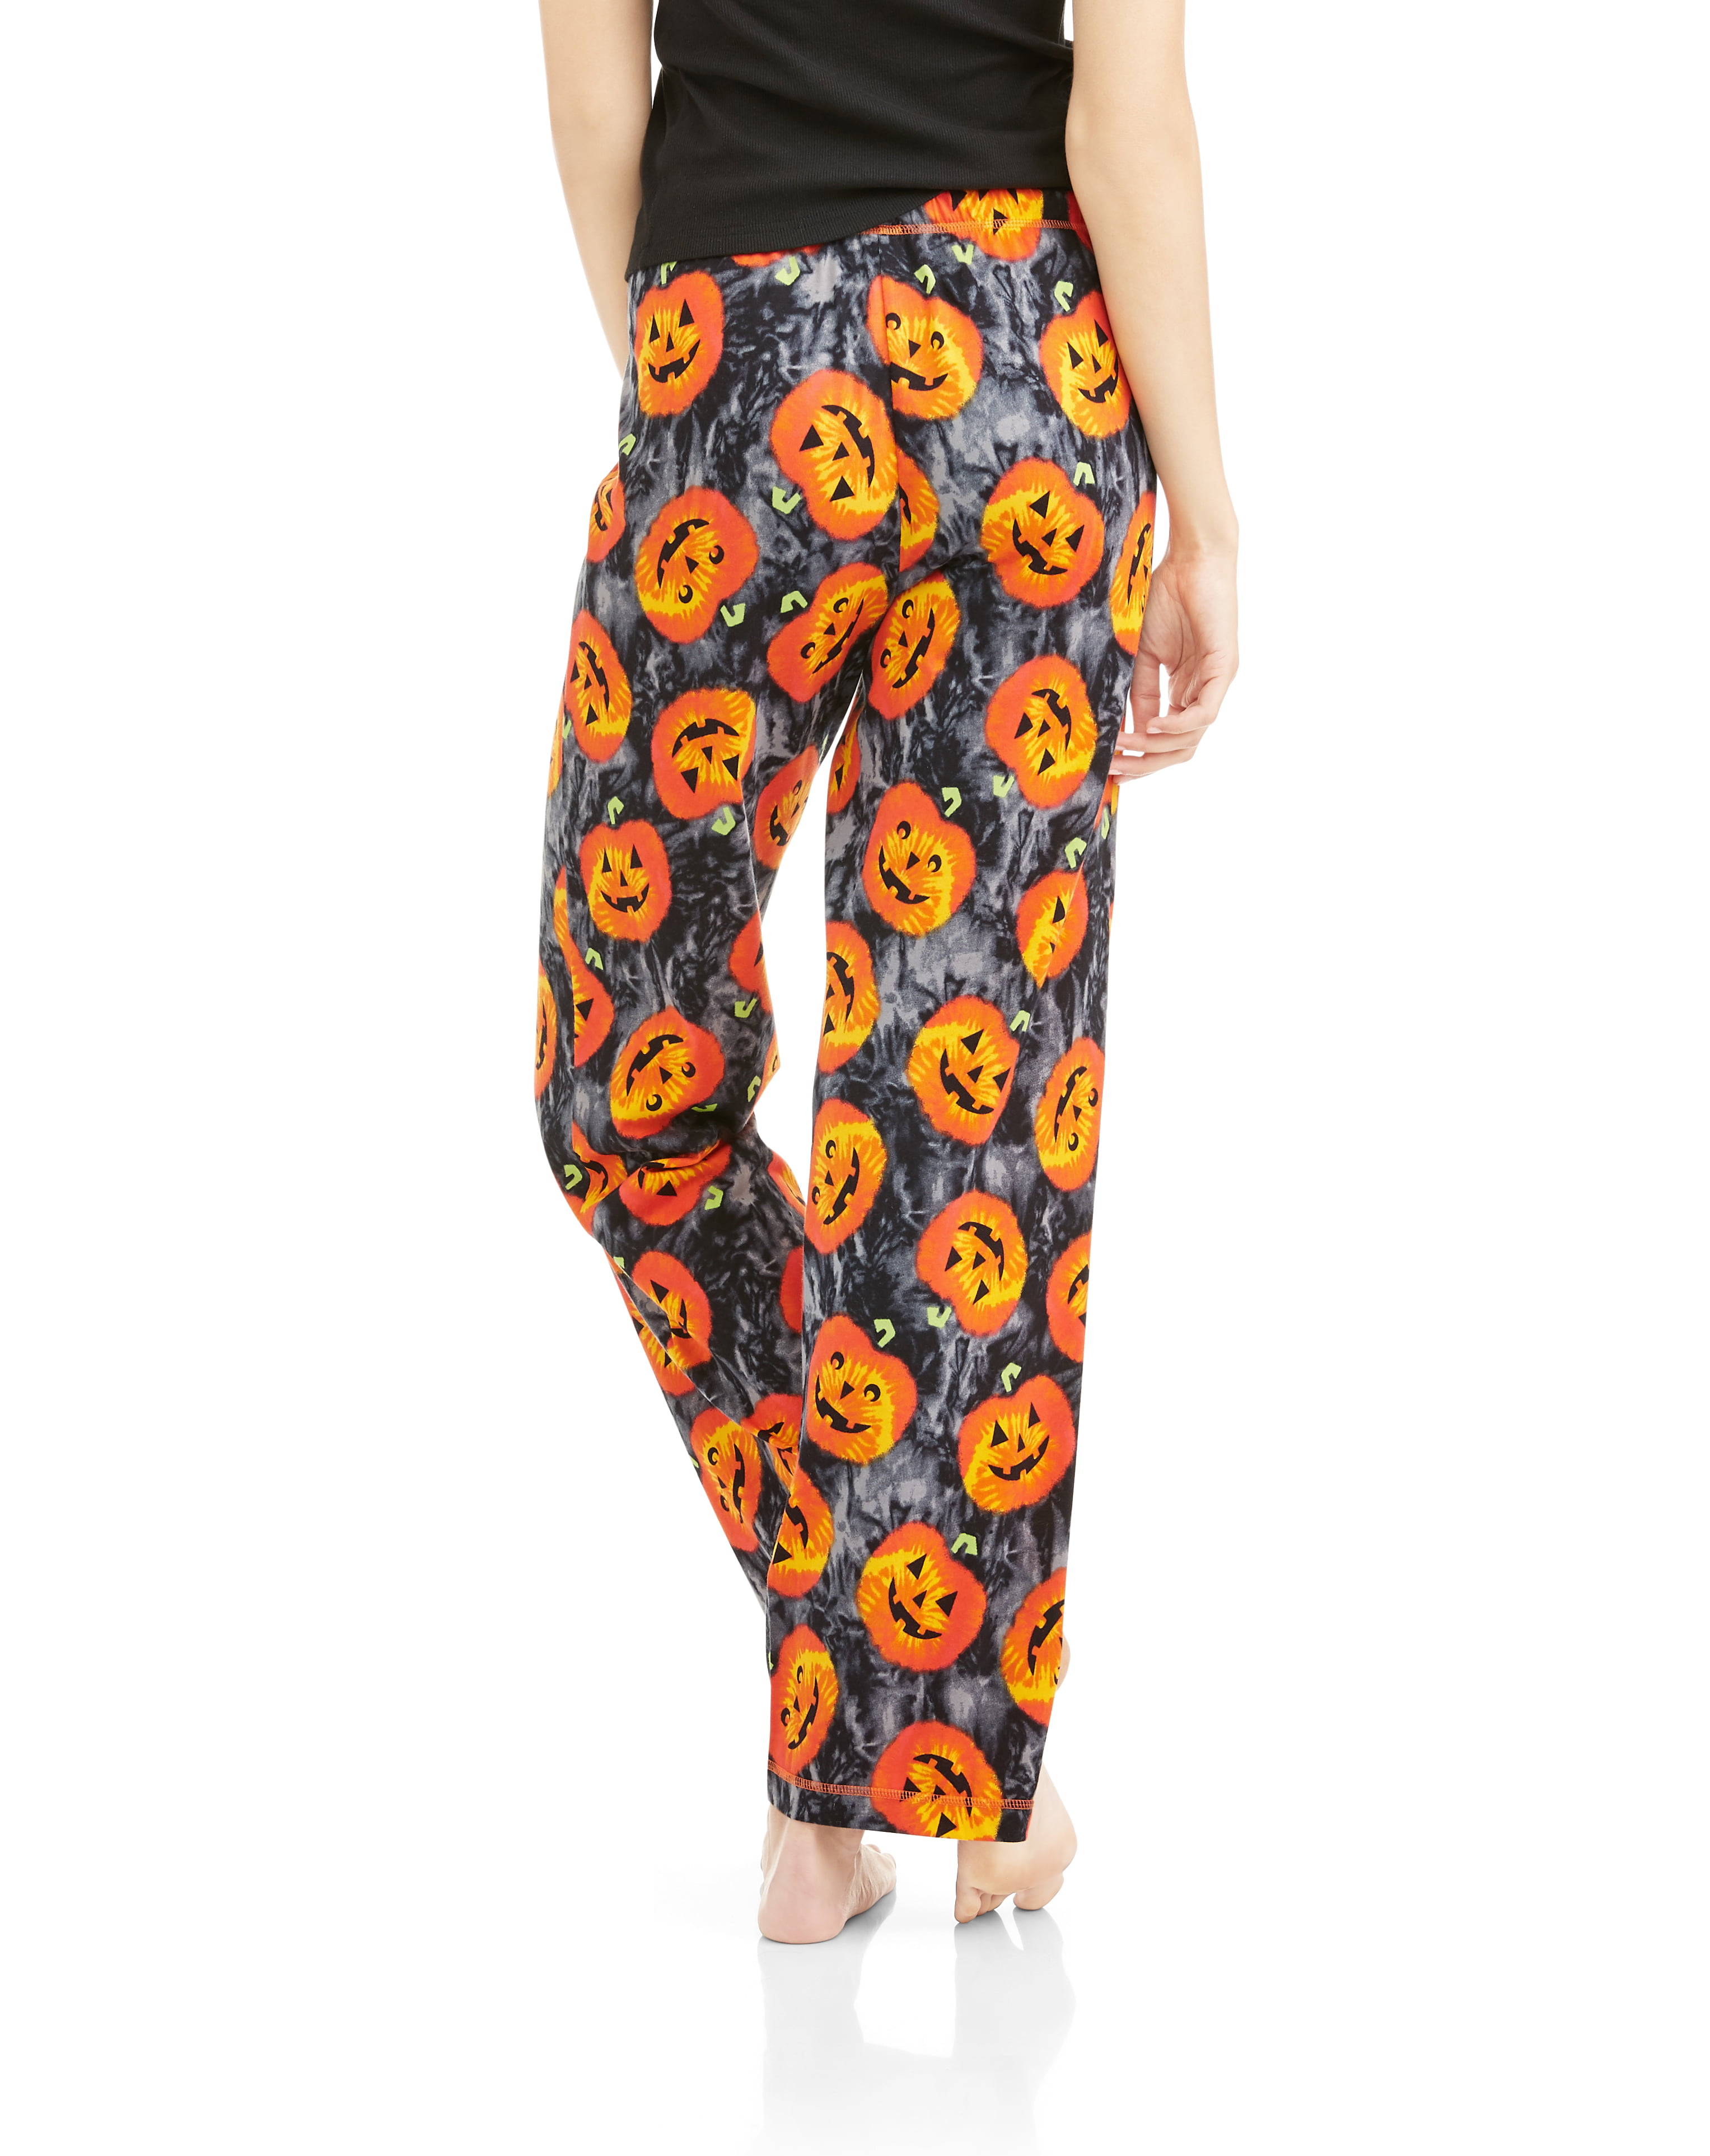 Unbranded women's pajama halloween jersey sleep pants (sizes s-3x)